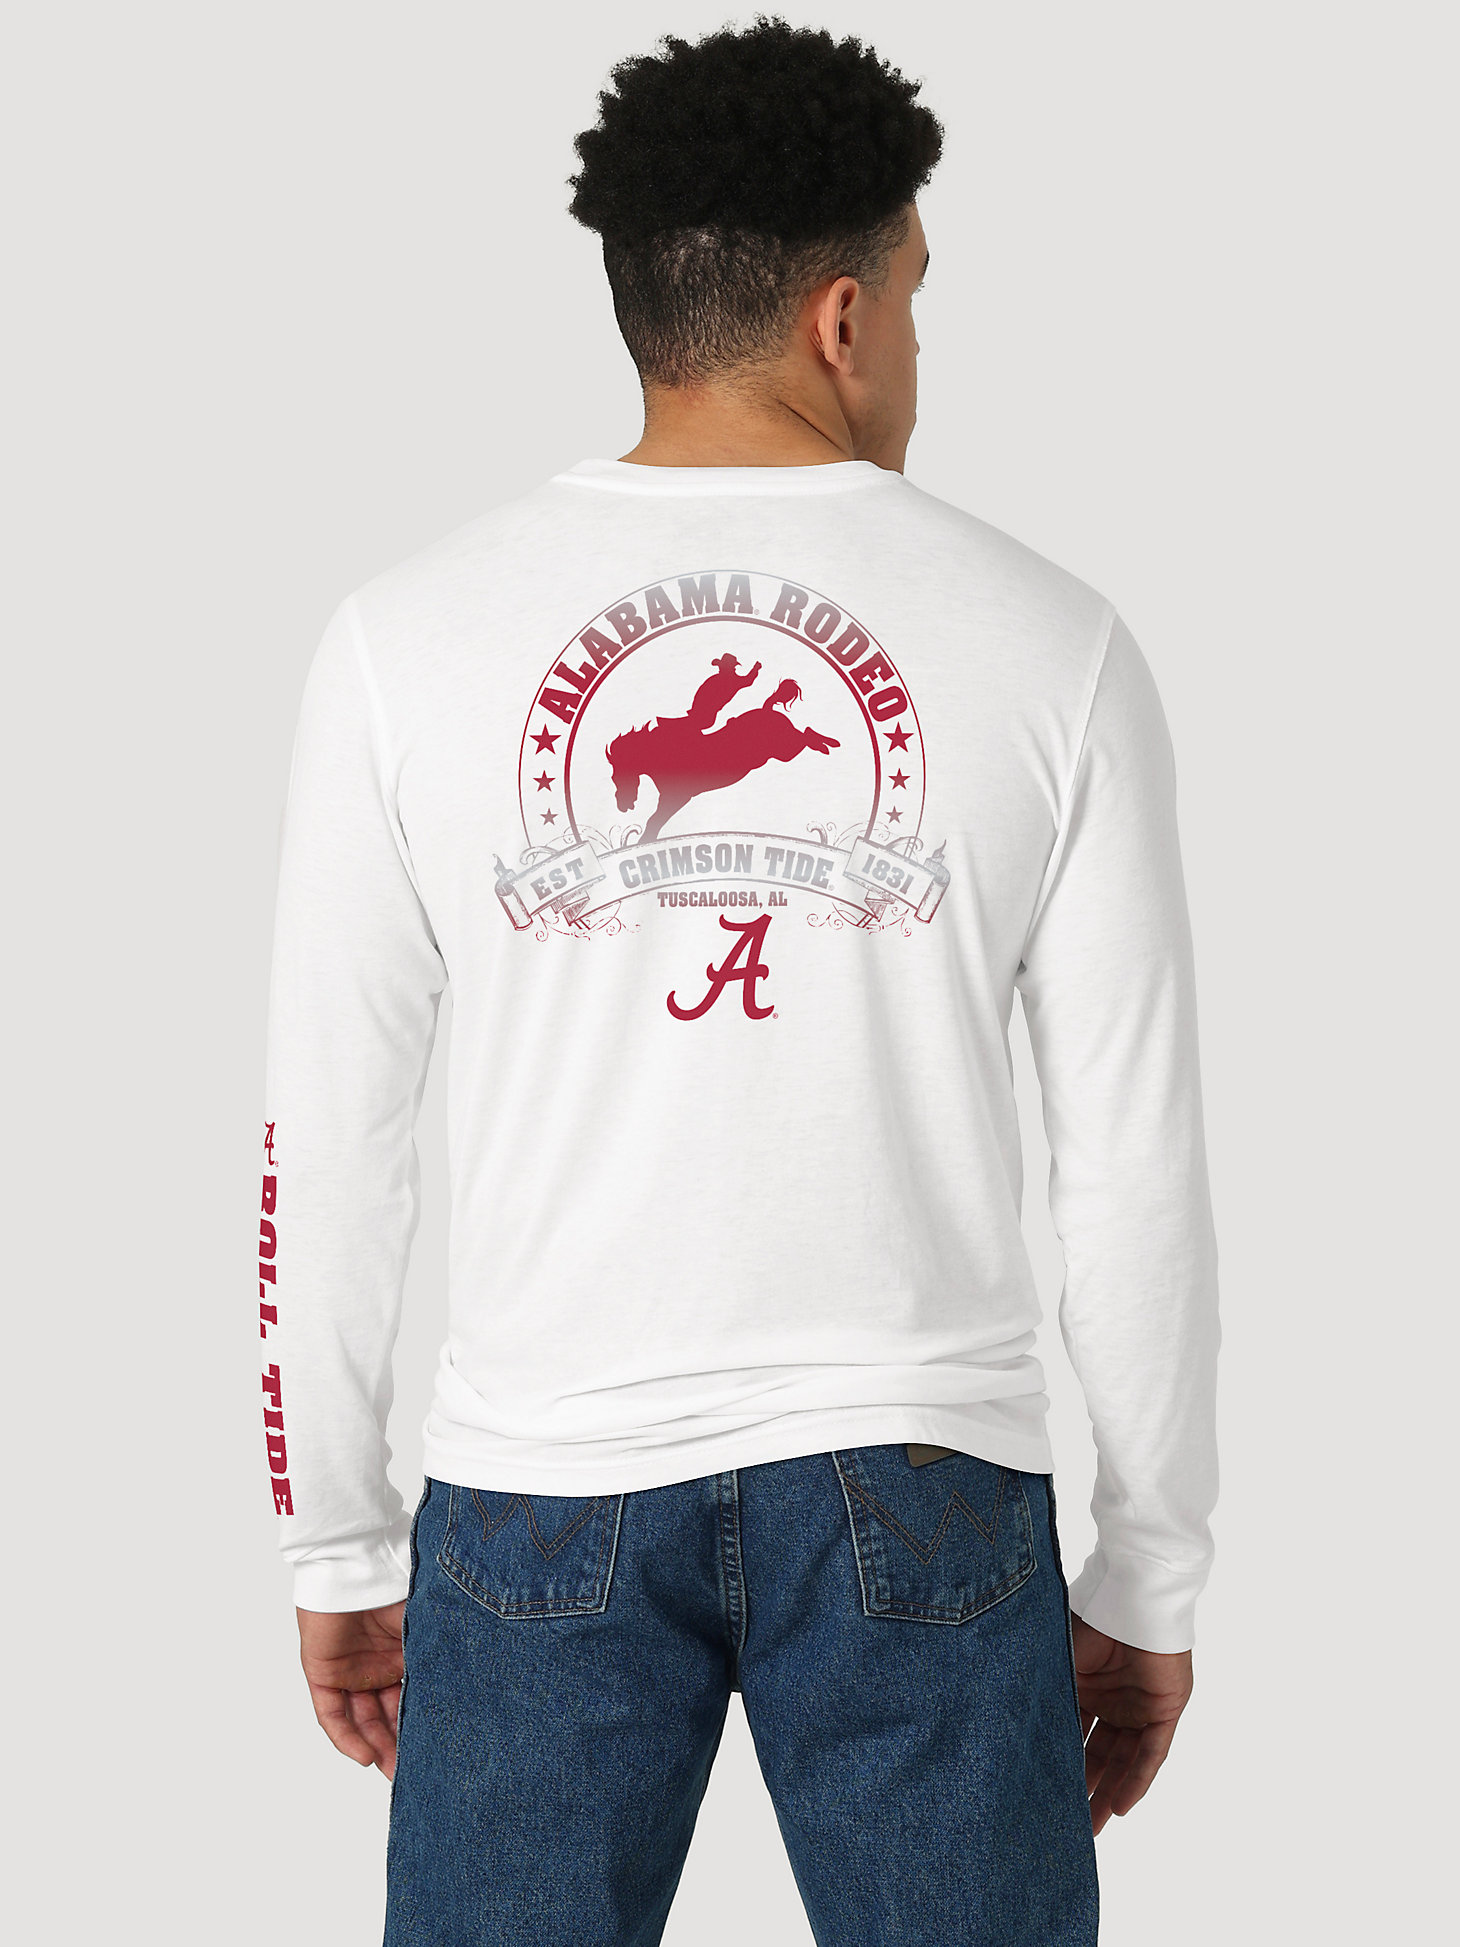 Wrangler Collegiate Rodeo Long Sleeve T-Shirt in University of Alabama main view